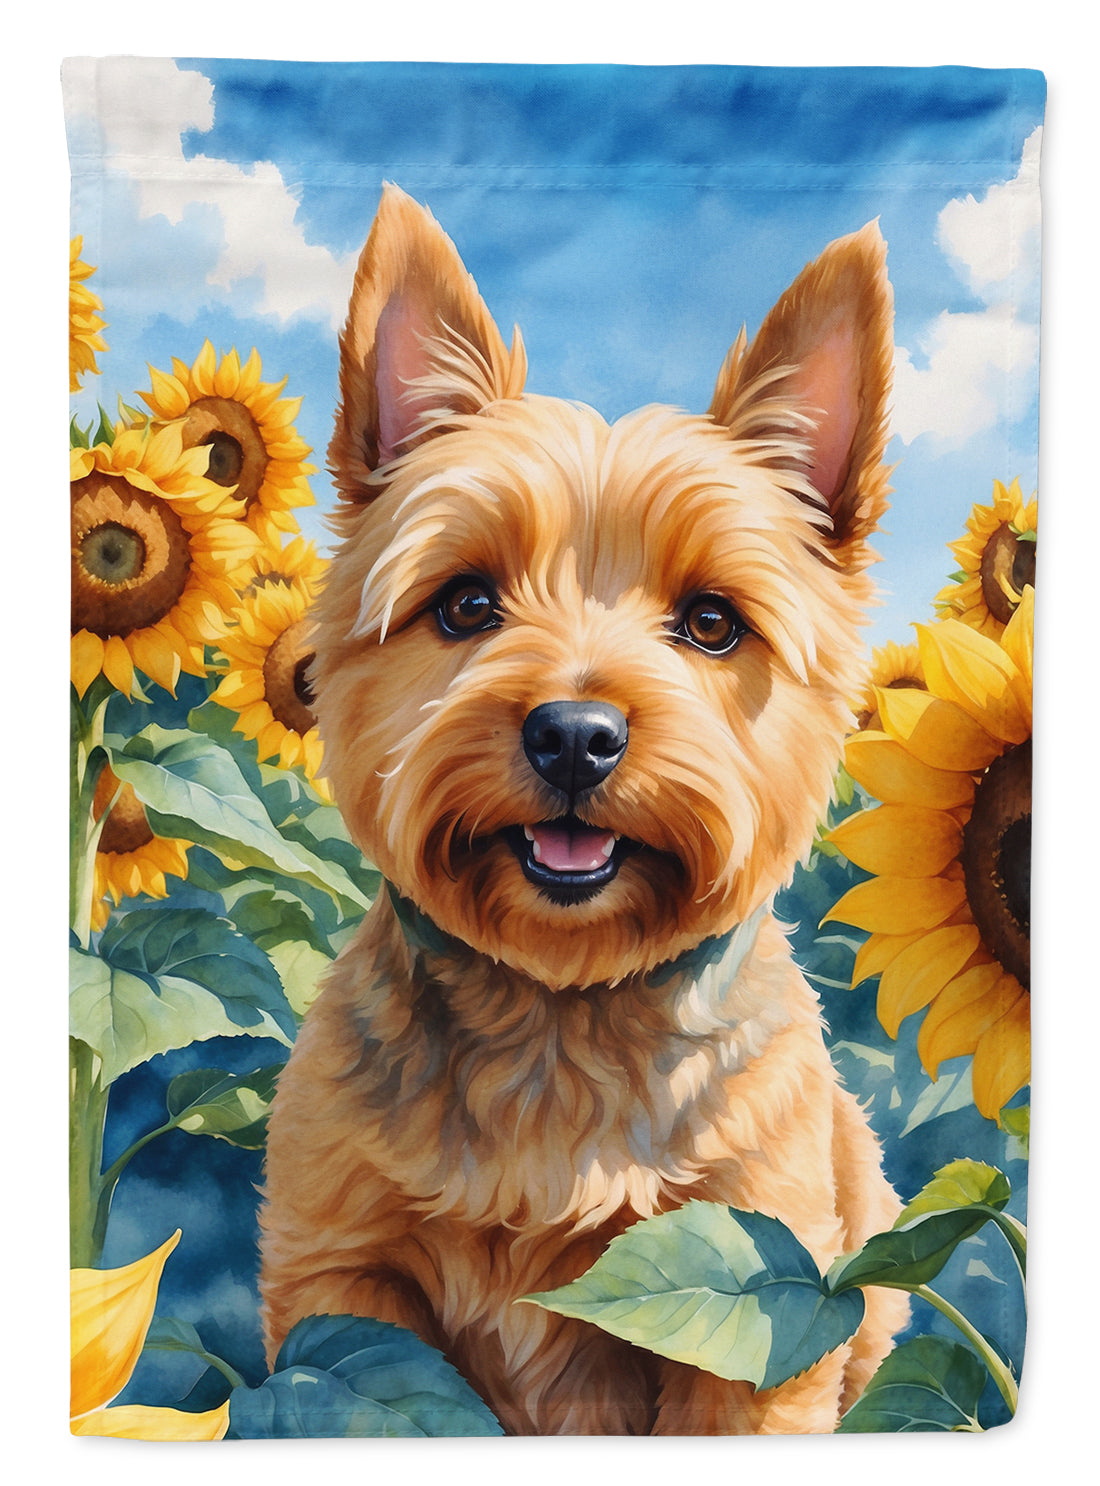 Buy this Norwich Terrier in Sunflowers Garden Flag